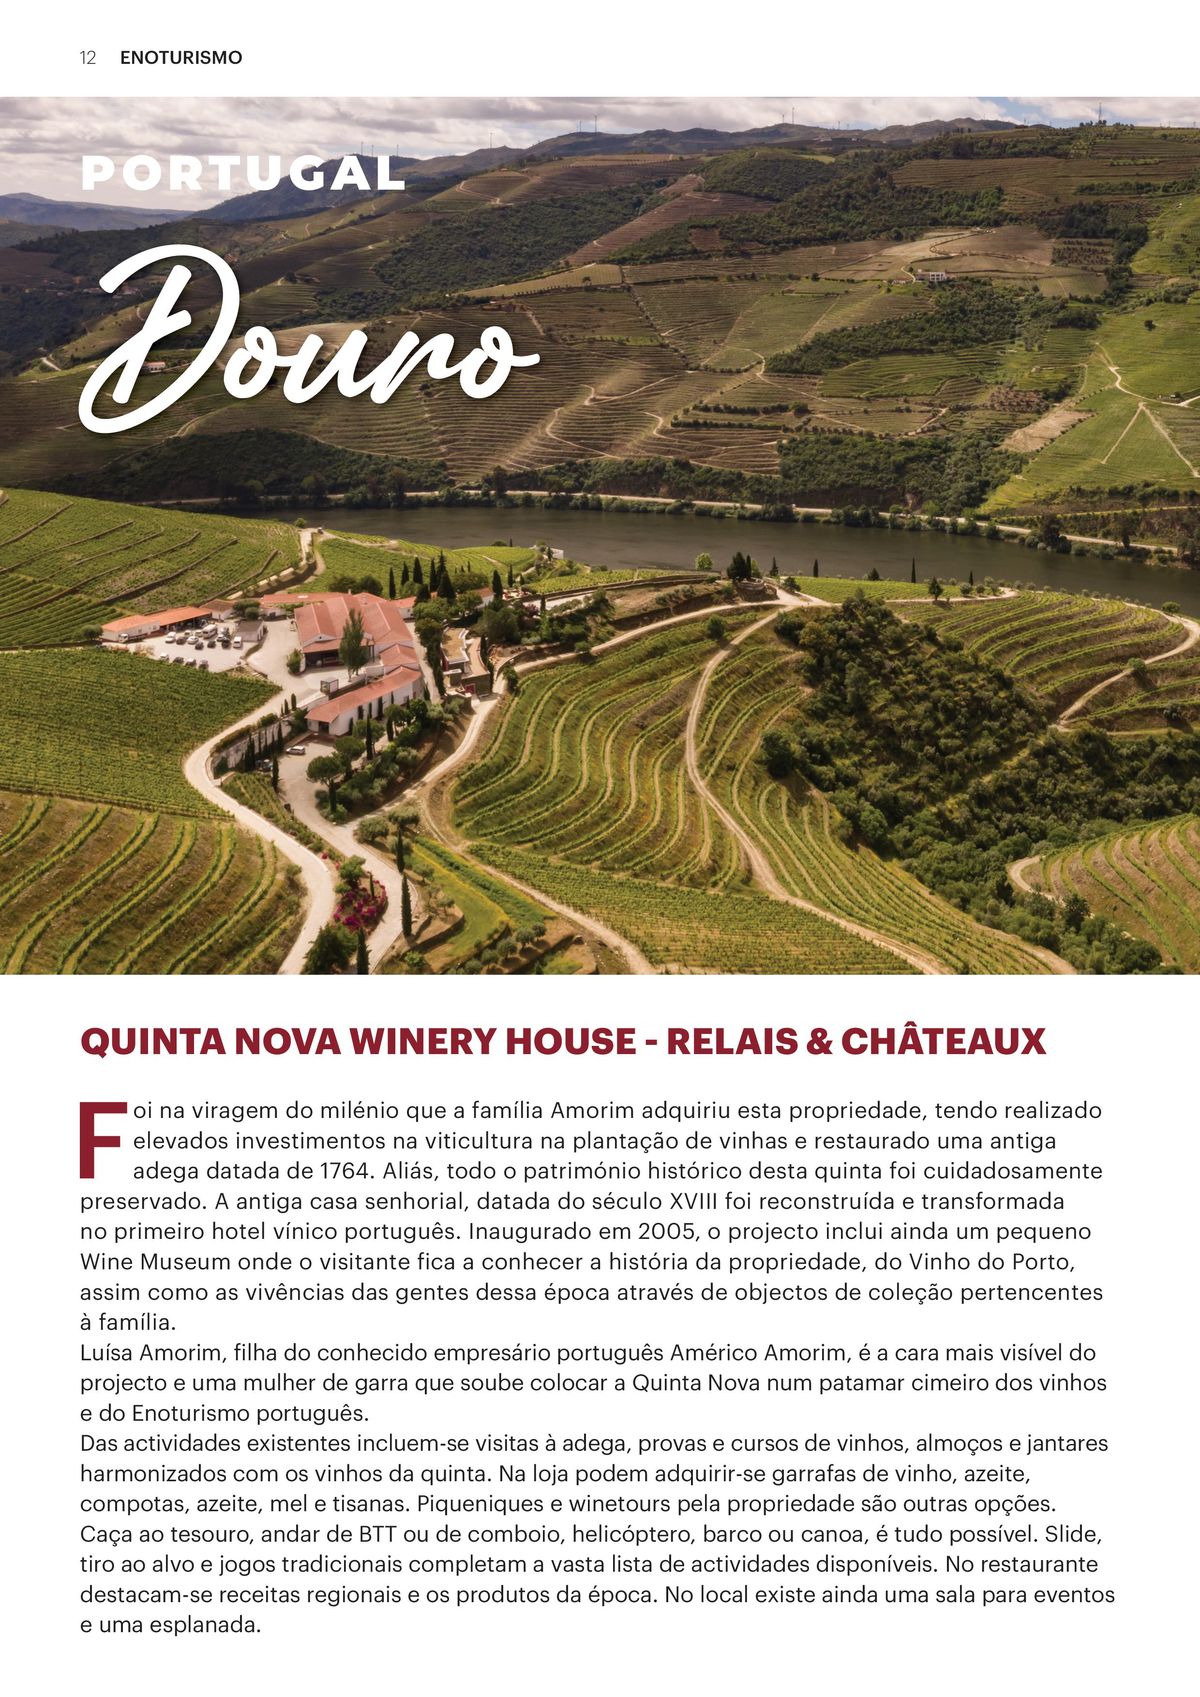 Enoturismo na Quinta Nova Winery House - Relais & Châteaux